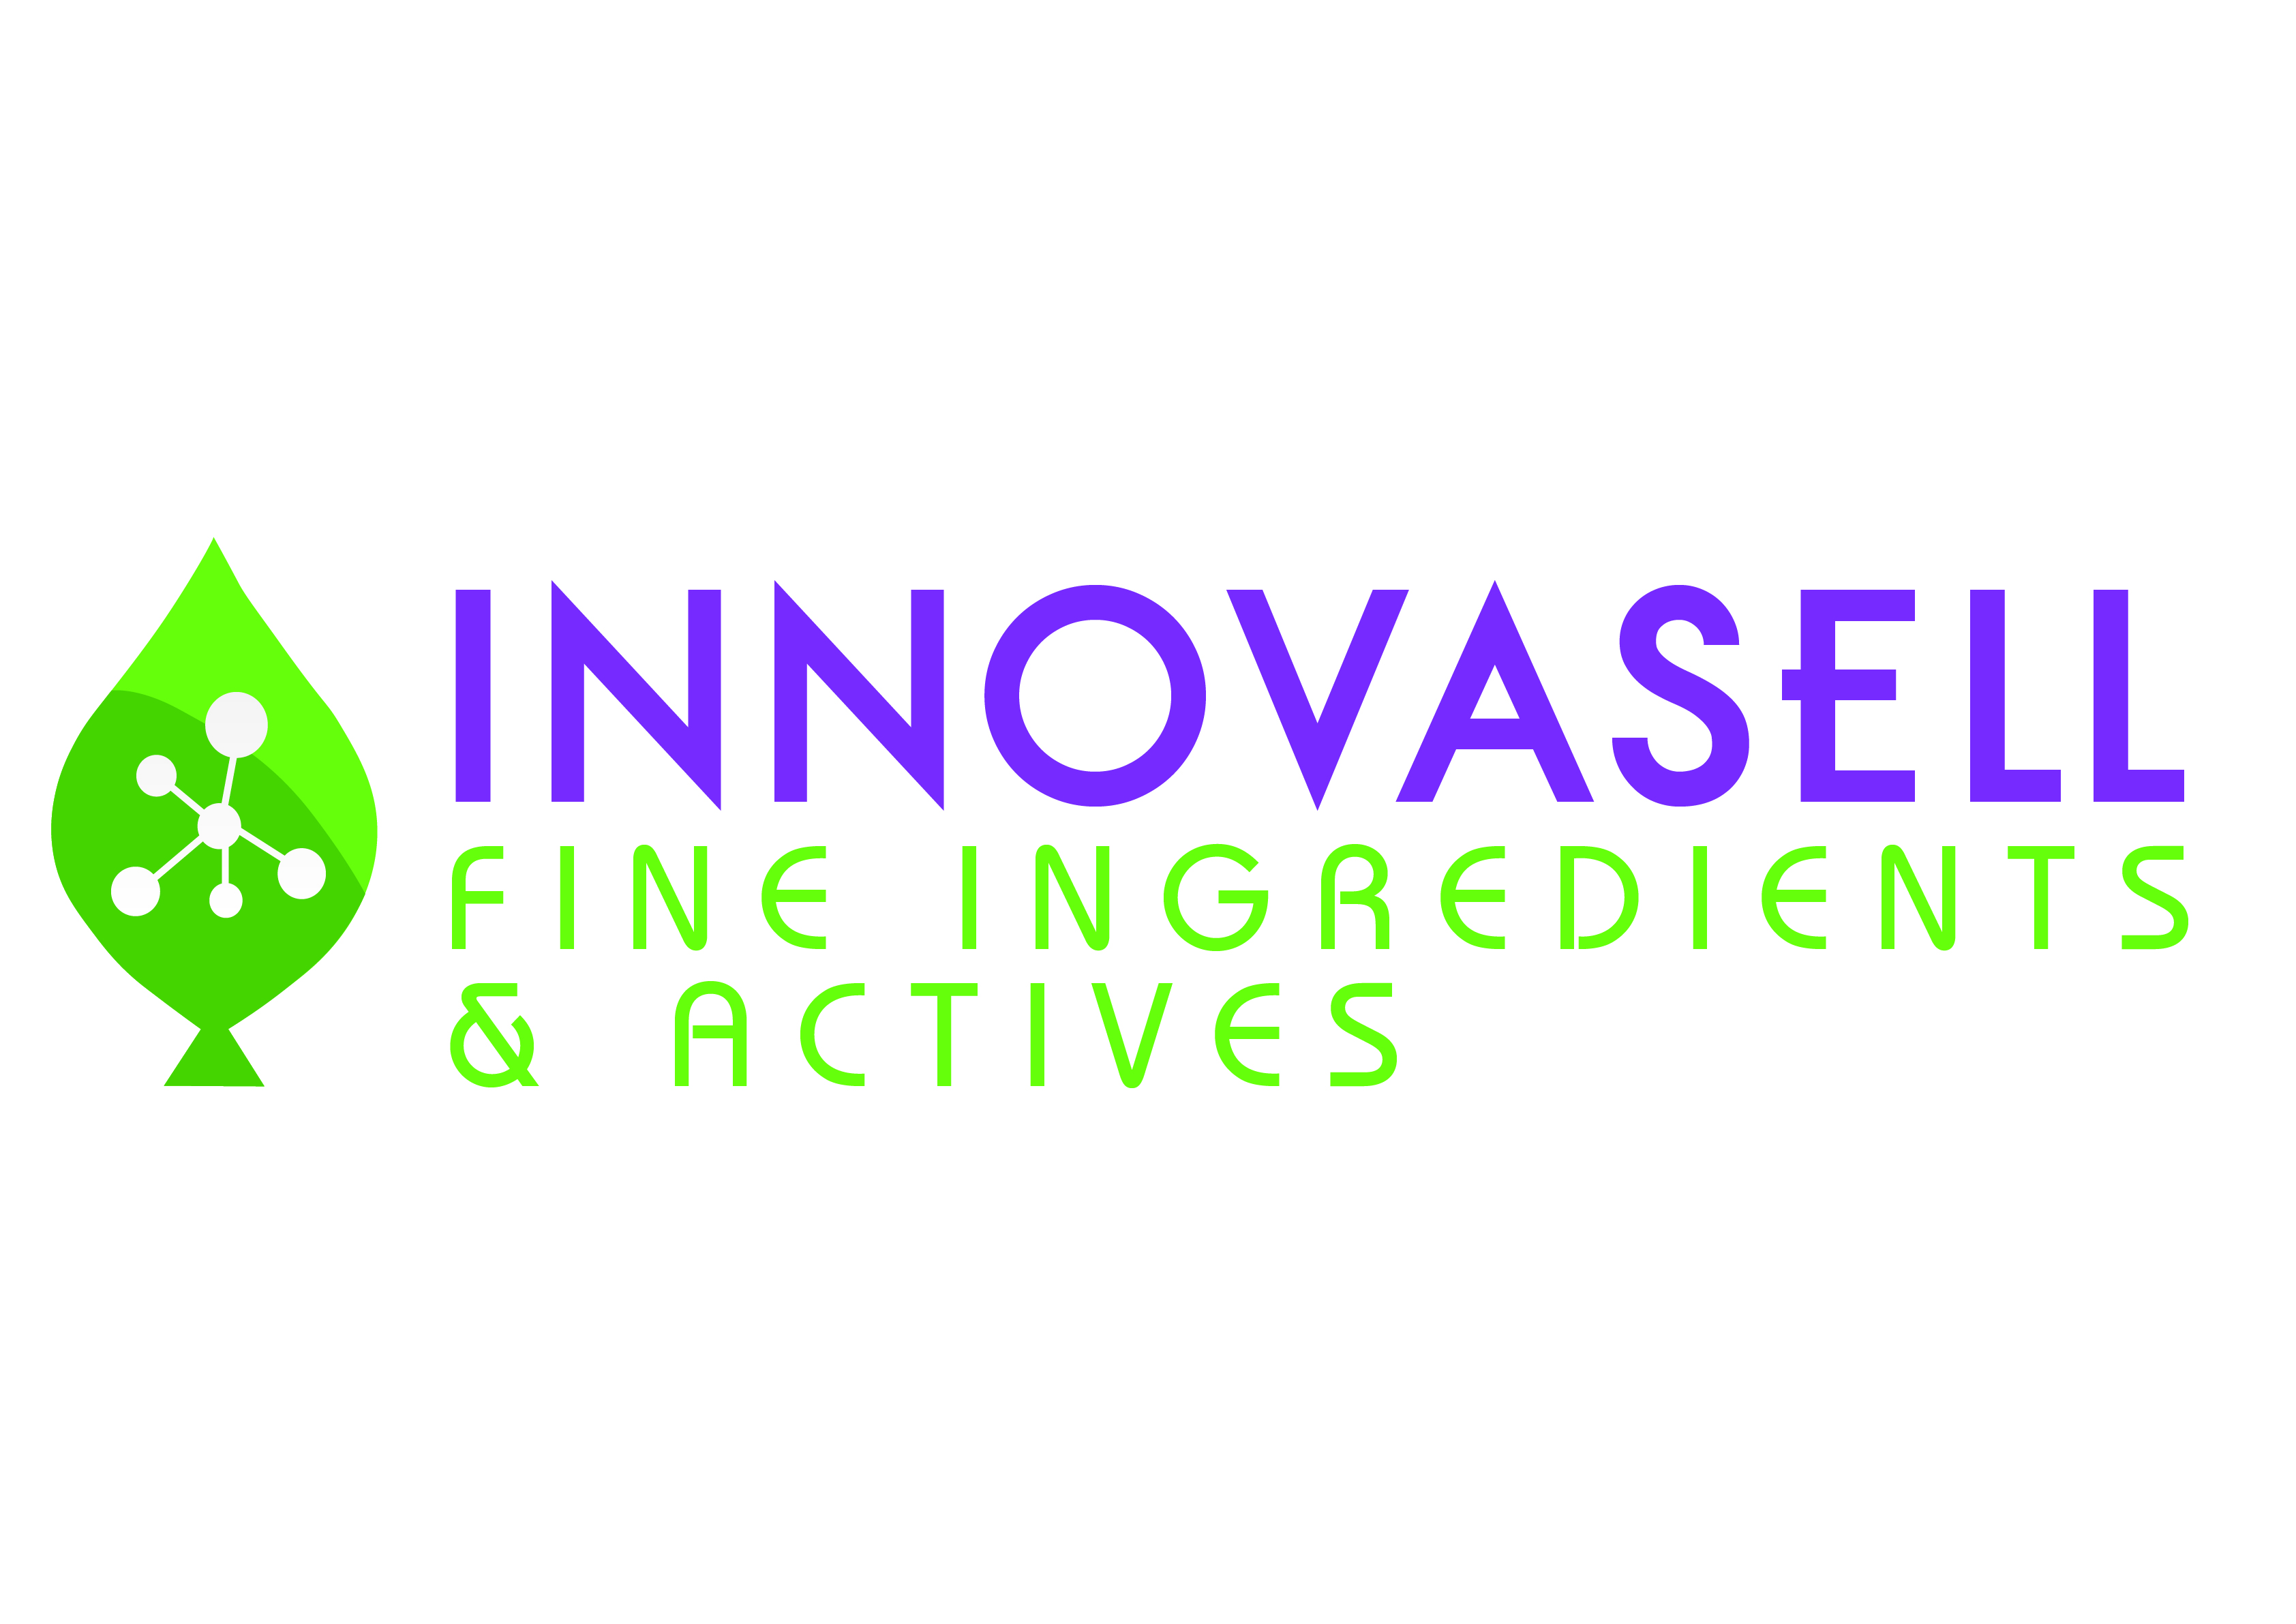 Innovasell Fine Ingredients & Acitves